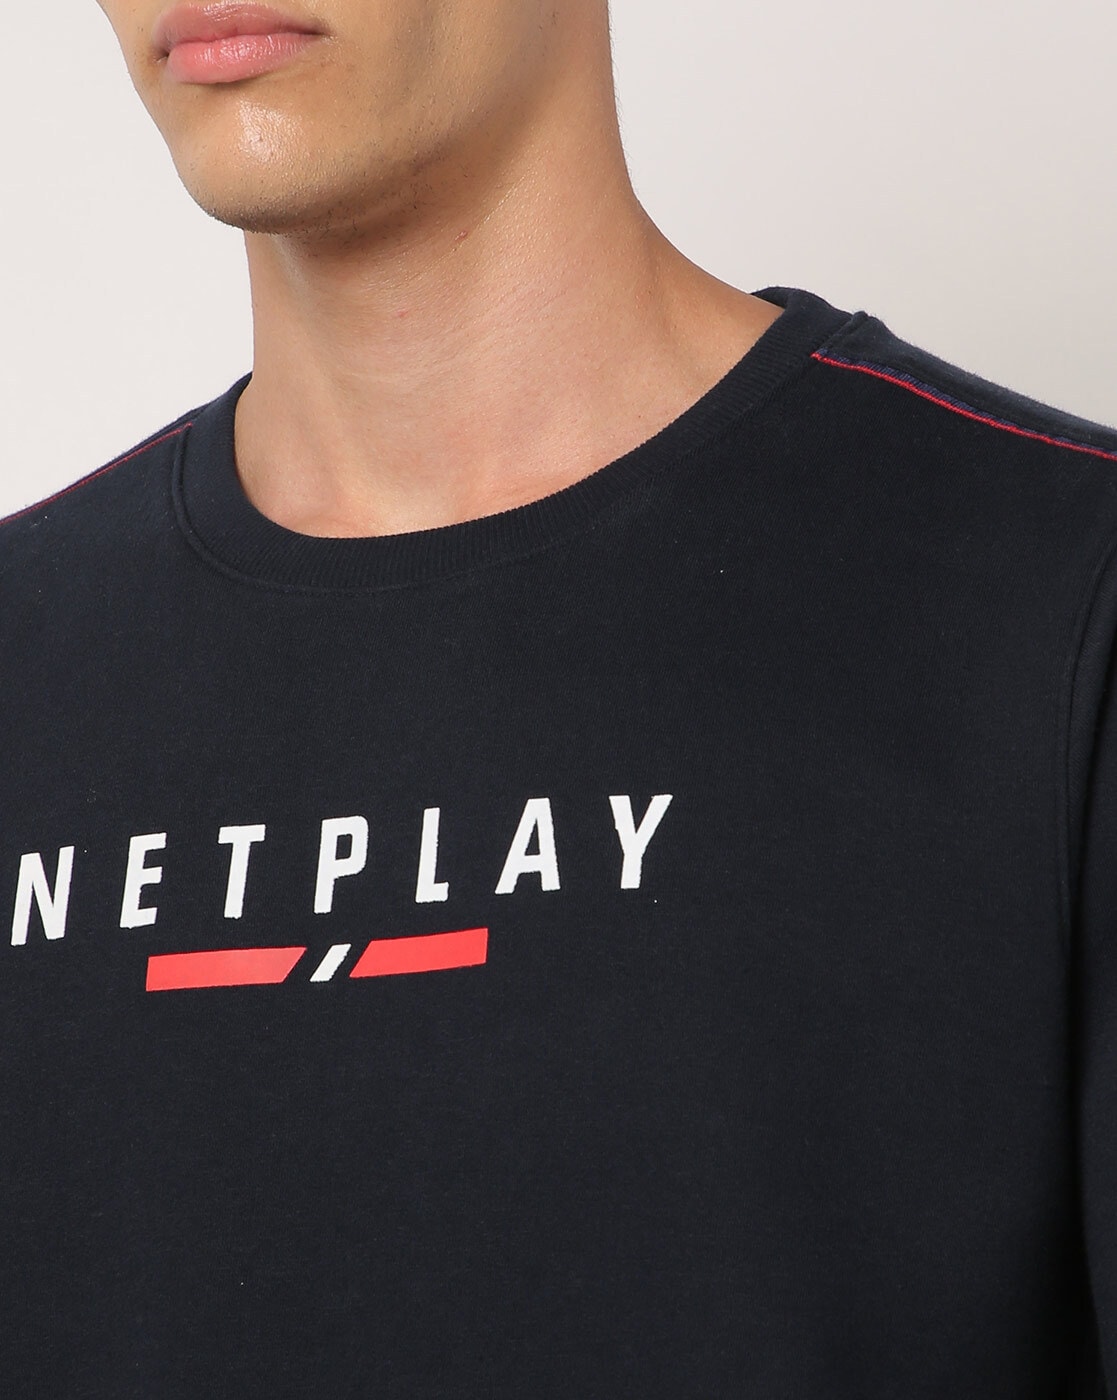 Netplay, Inc. (@netplayinc) / X